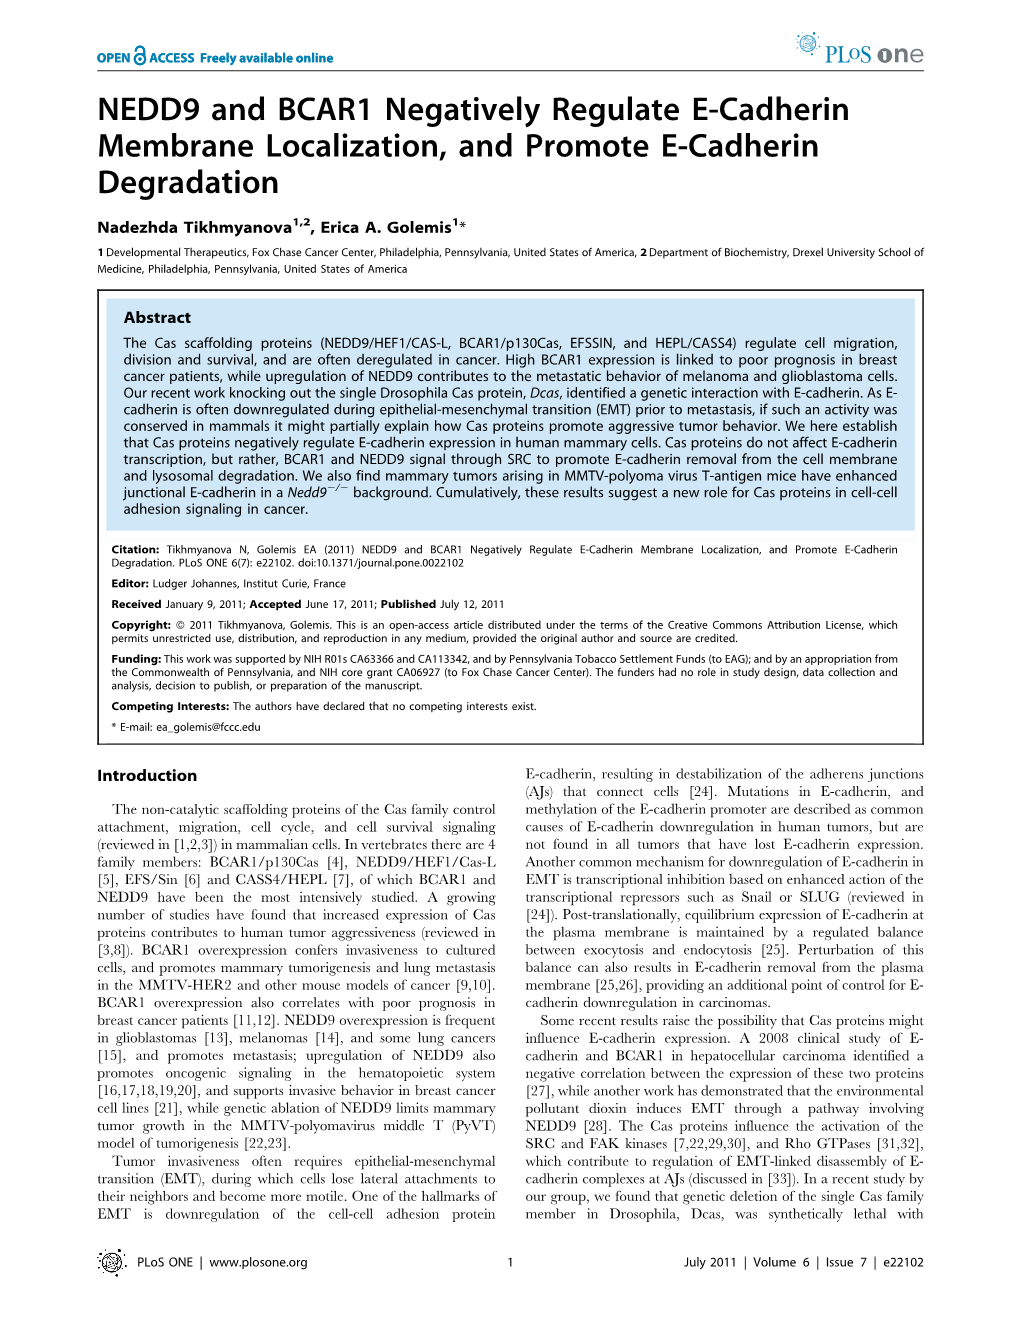 NEDD9 and BCAR1 Negatively Regulate E-Cadherin Membrane Localization, and Promote E-Cadherin Degradation